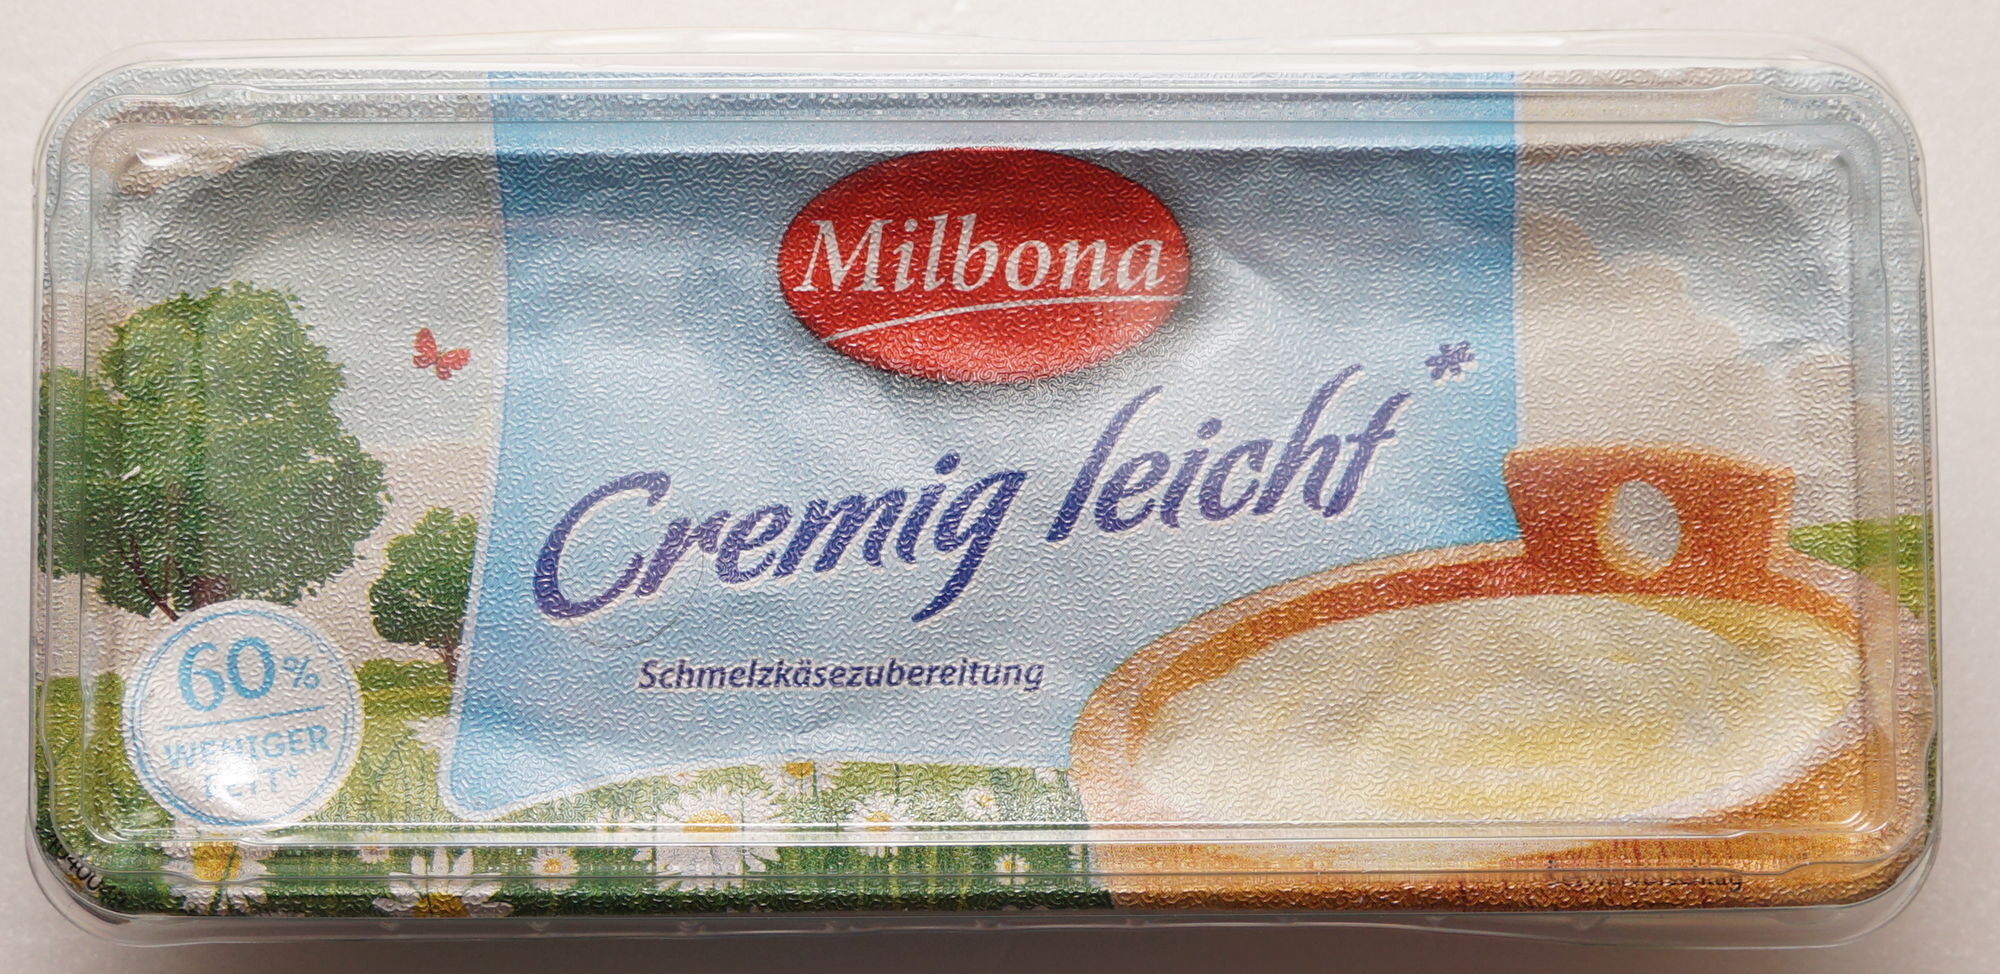 Schmelzkäsezubereitung Cremig leicht - Produto - de